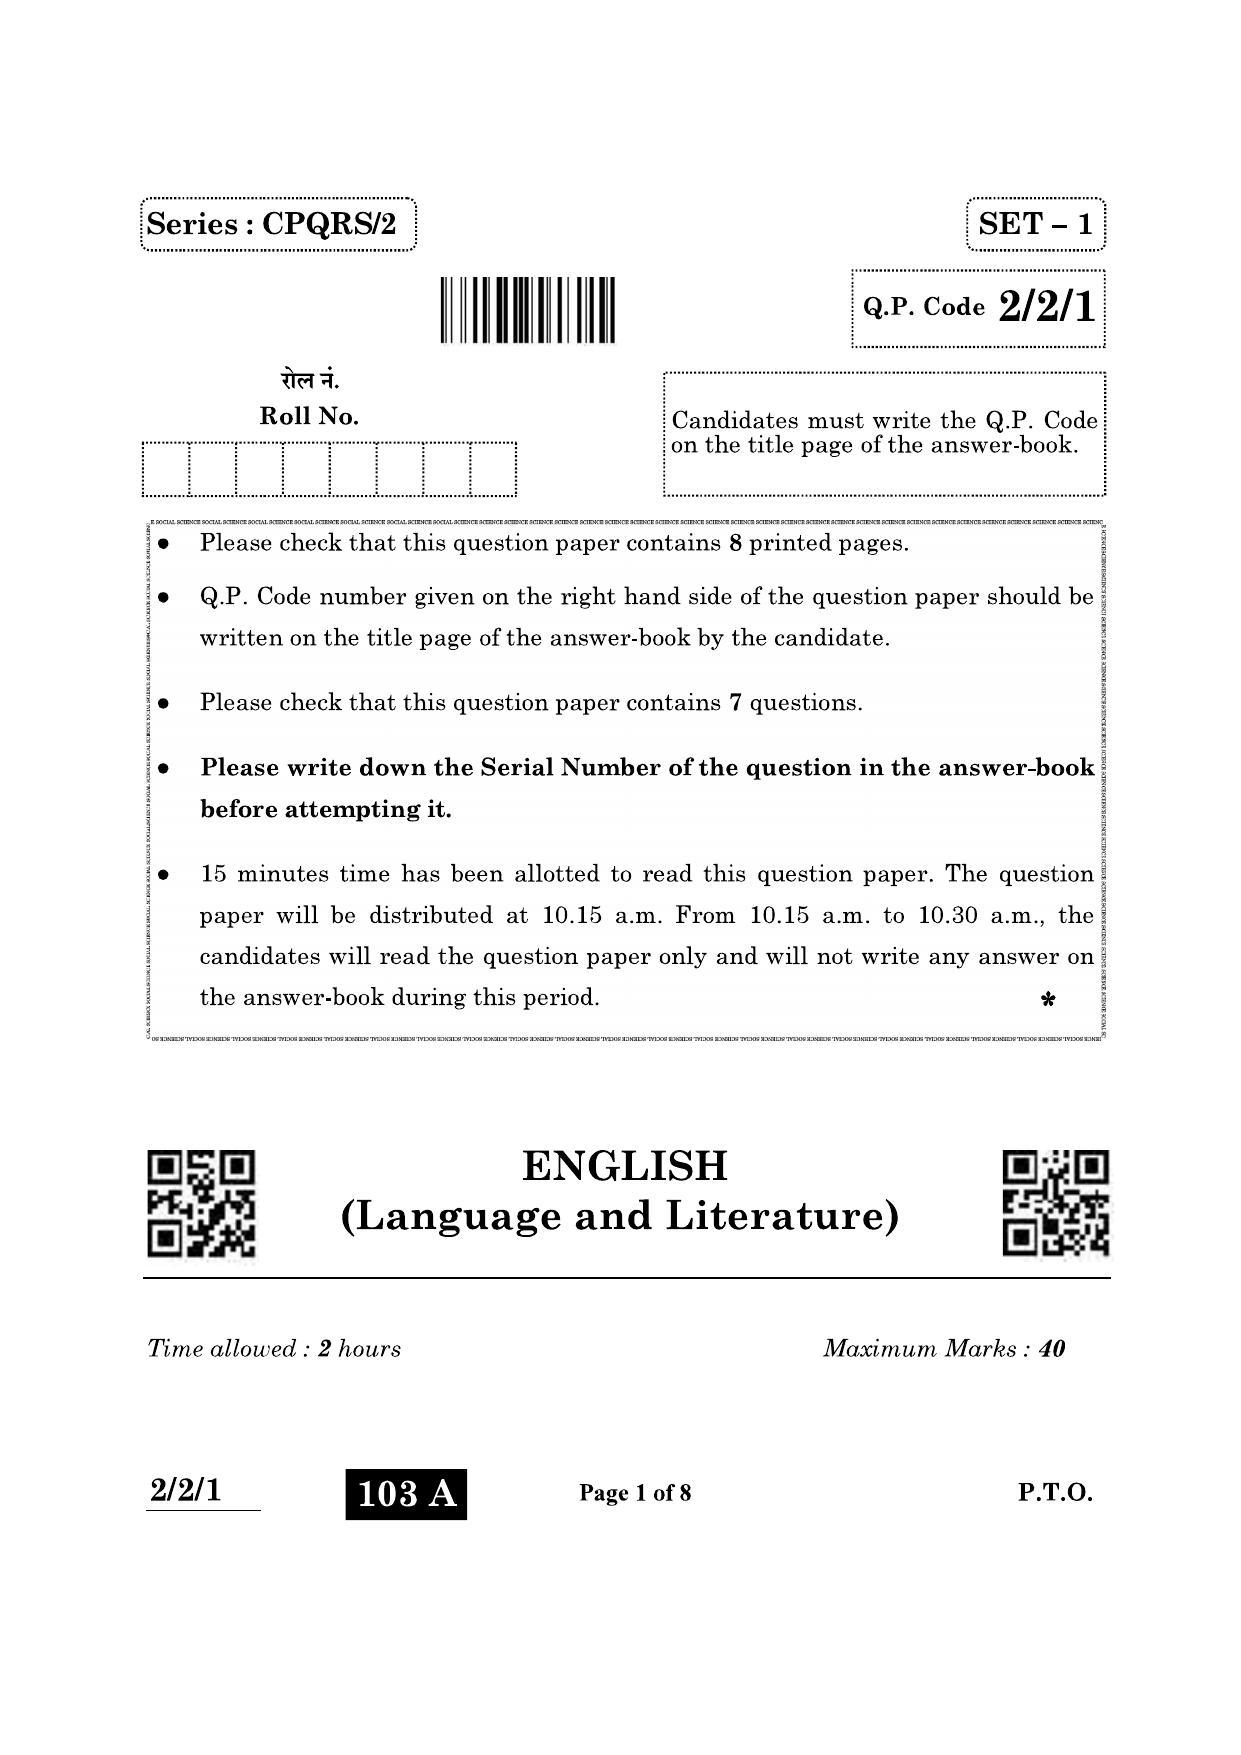 CBSE Class 10 2-2-1 (English L & L) 2022 Question Paper - Page 1